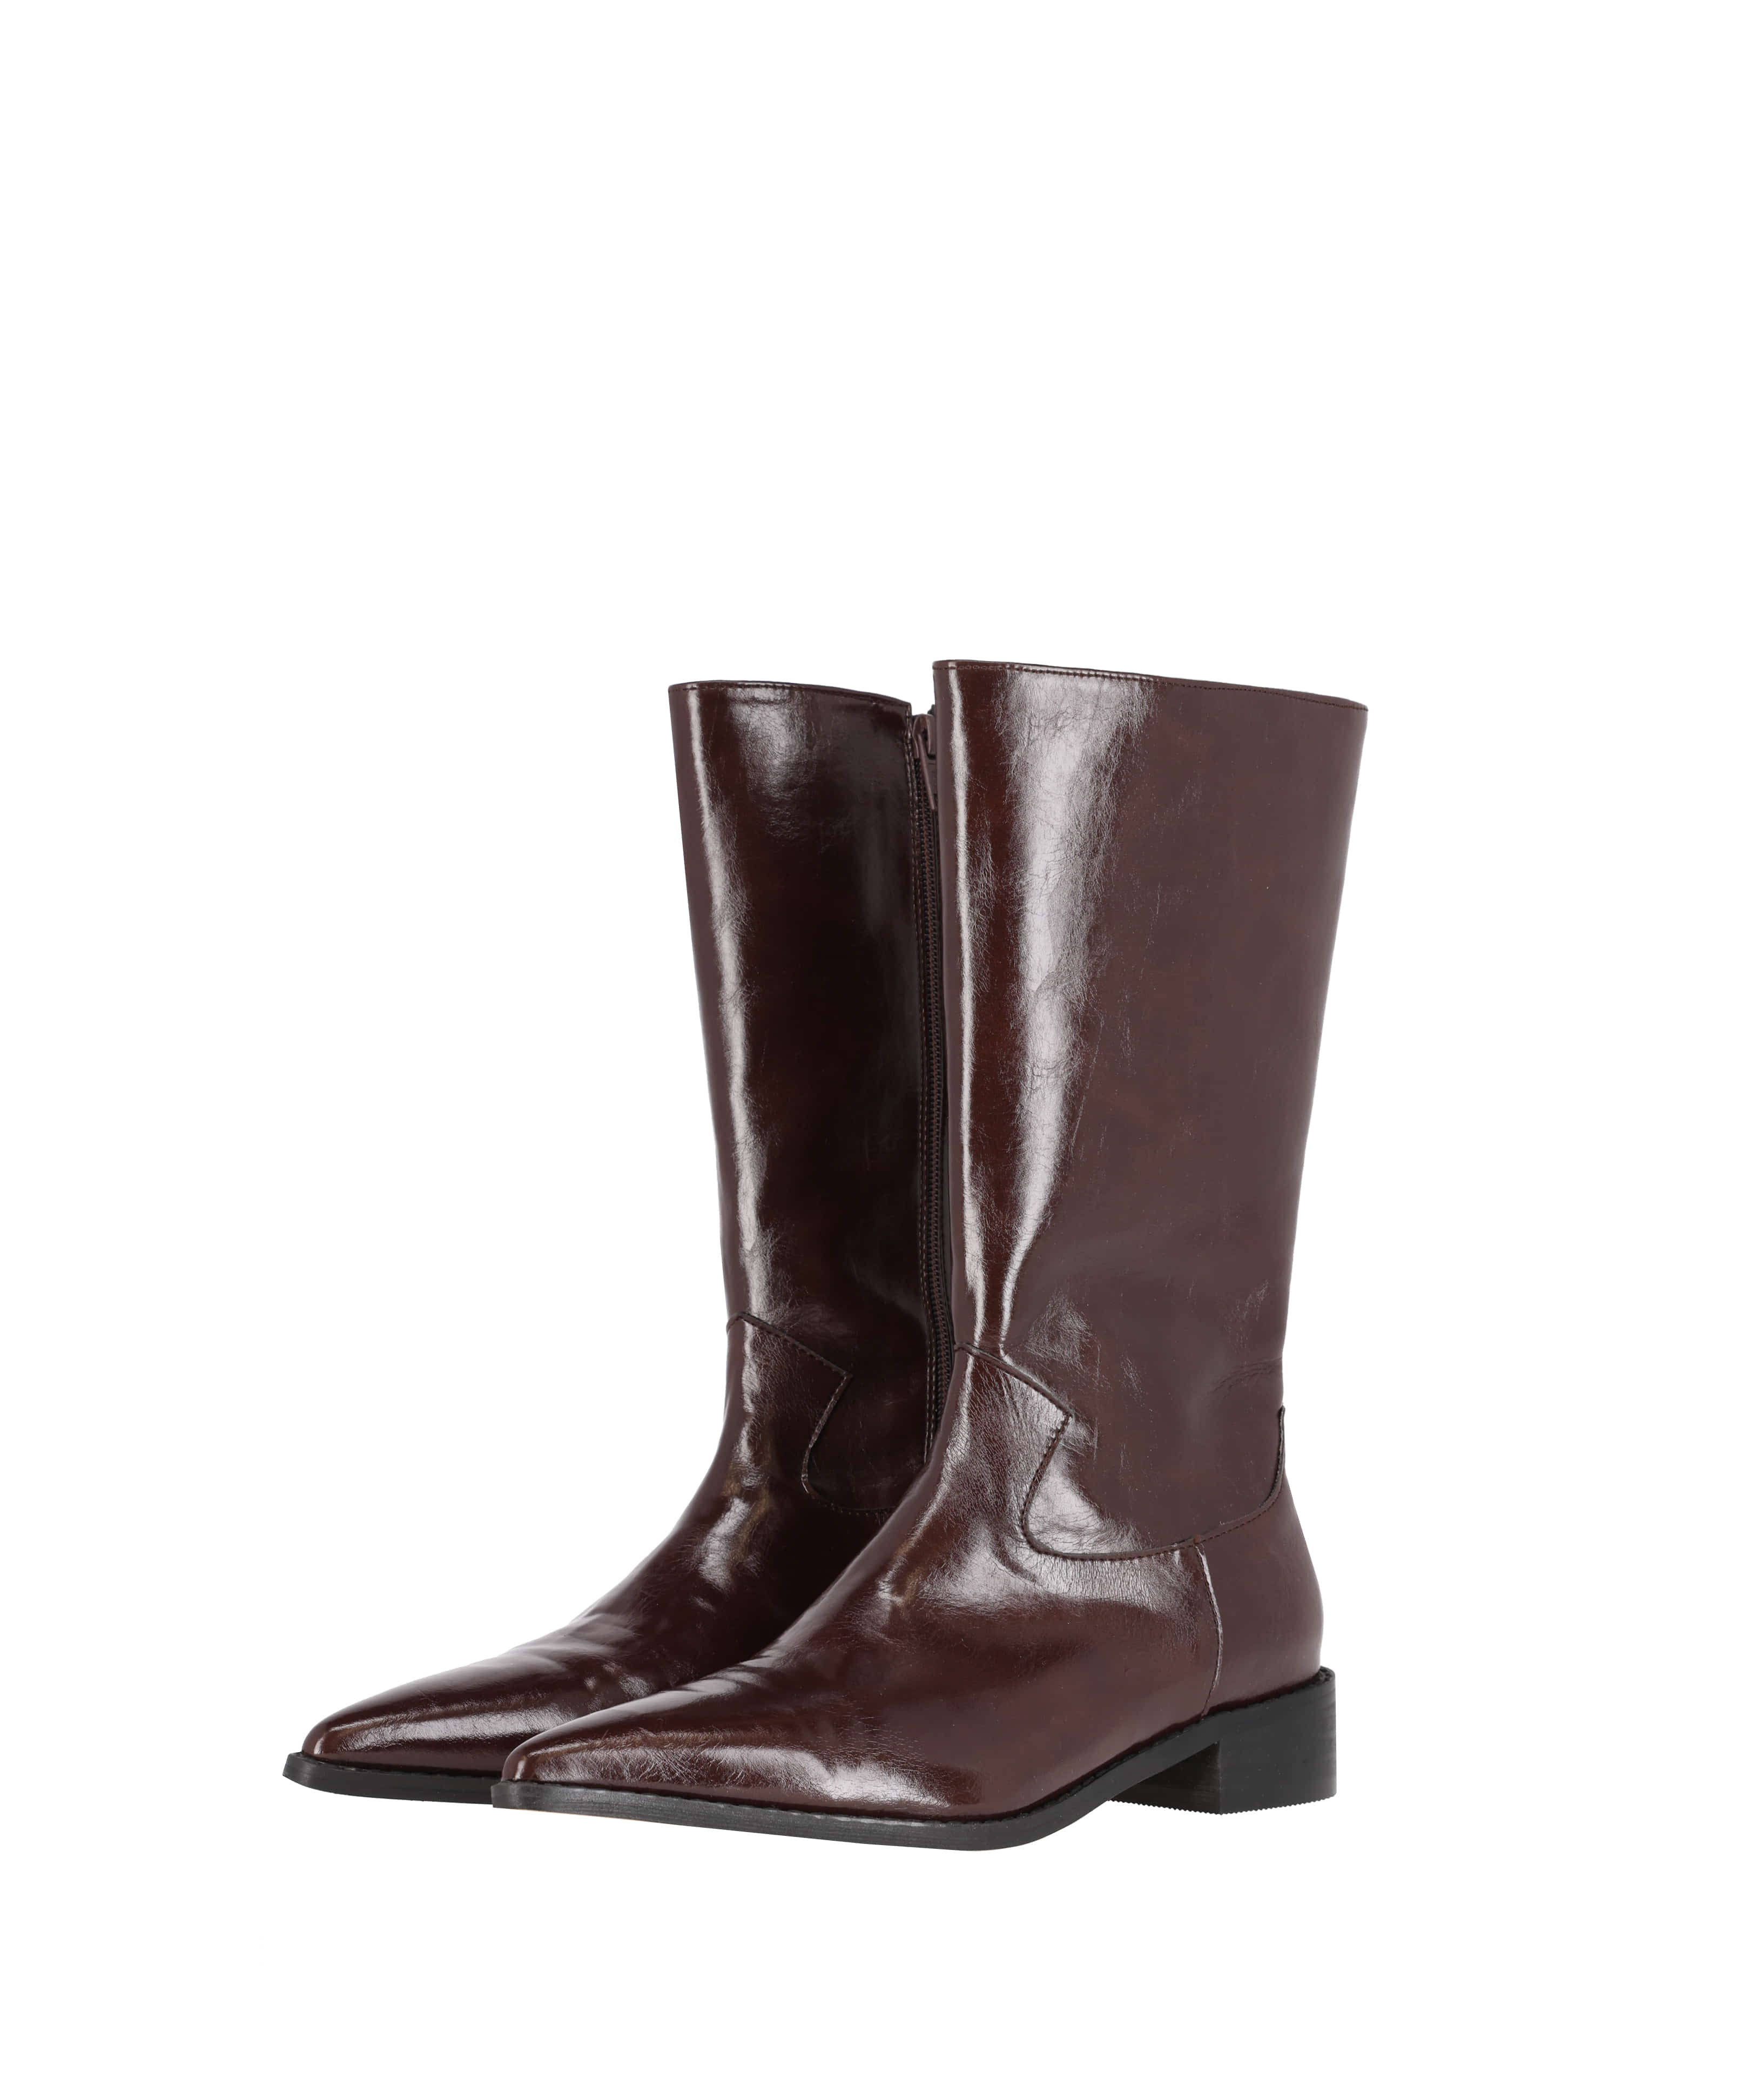 Hazel leather boots